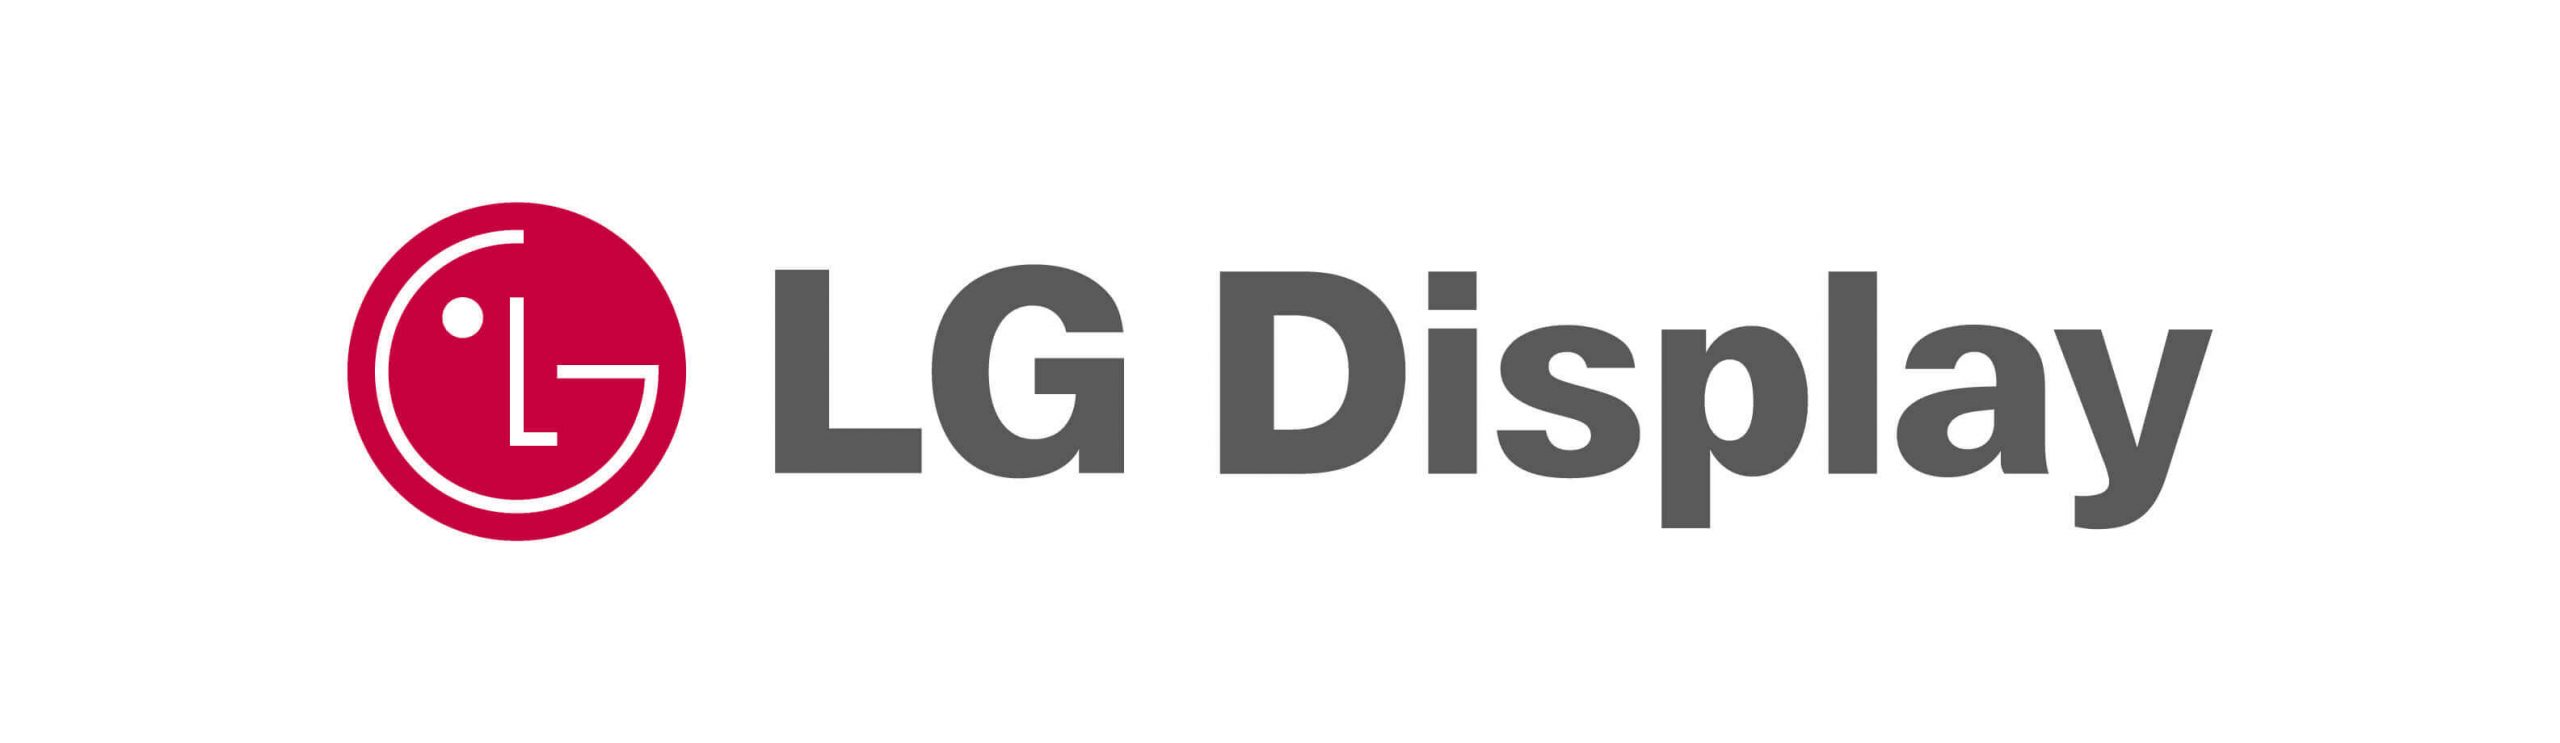 LG-Display-logo.jpg